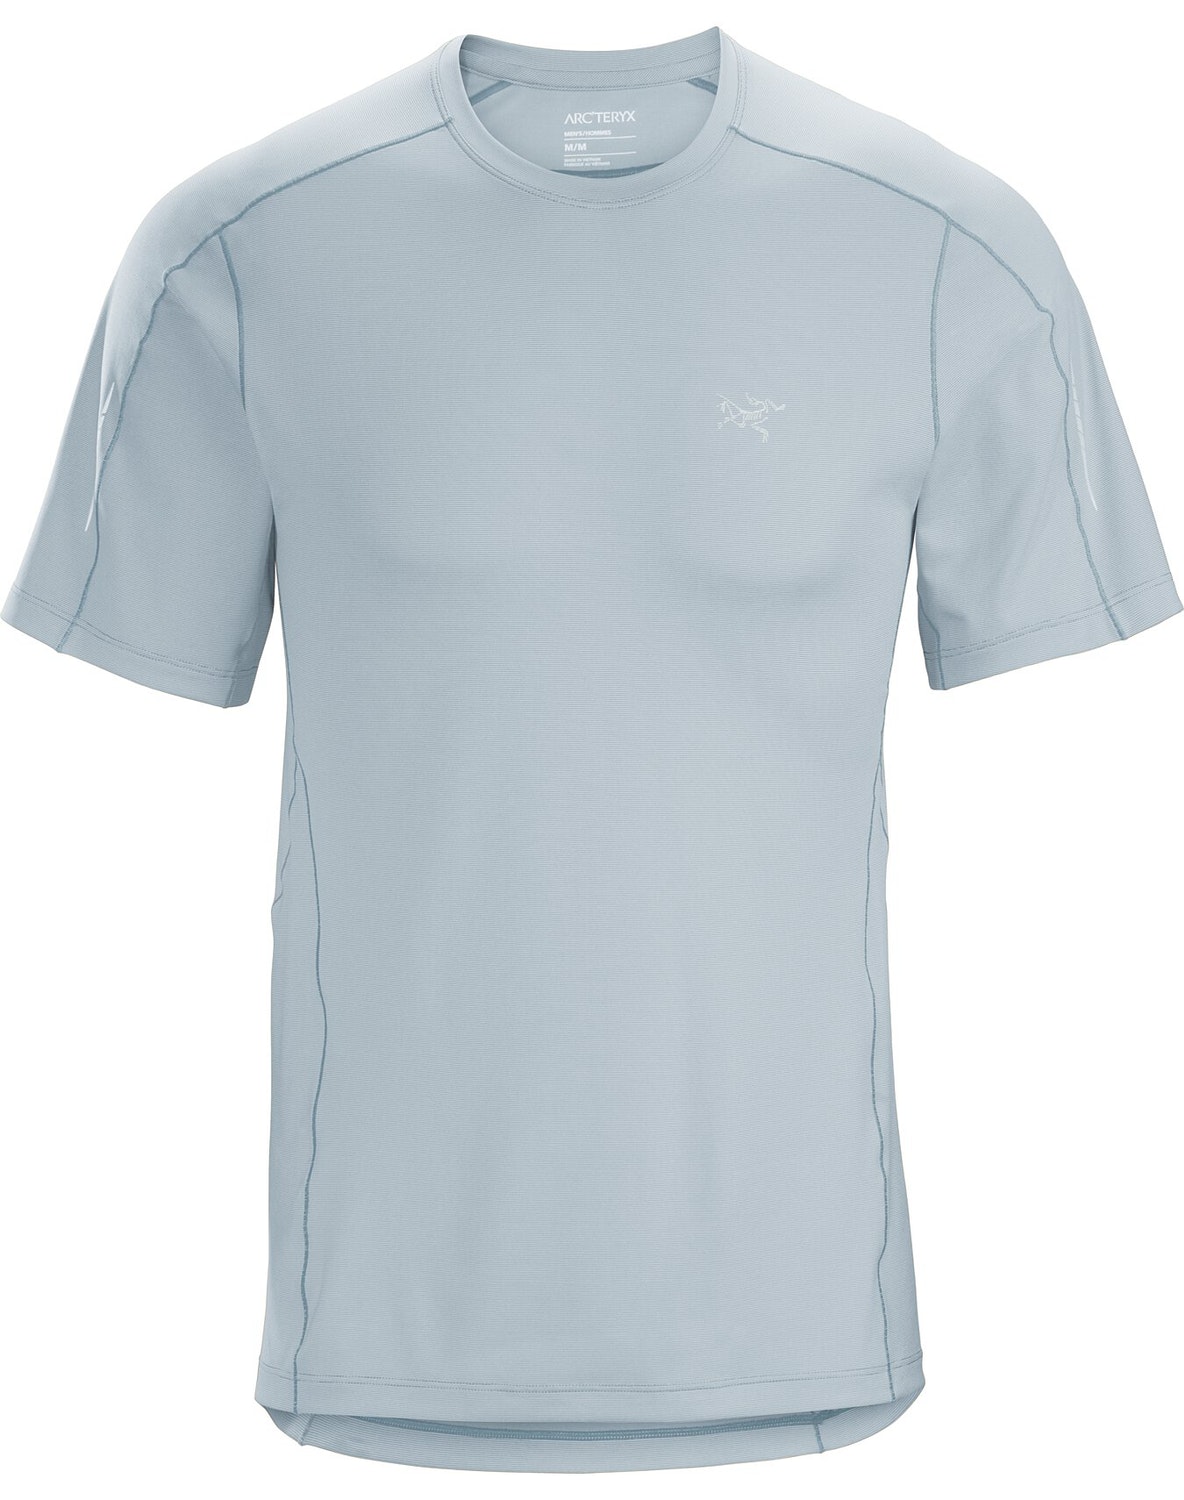 T-shirt Arc'teryx Motus Crew Neck Uomo Grigie Chiaro - IT-7944313